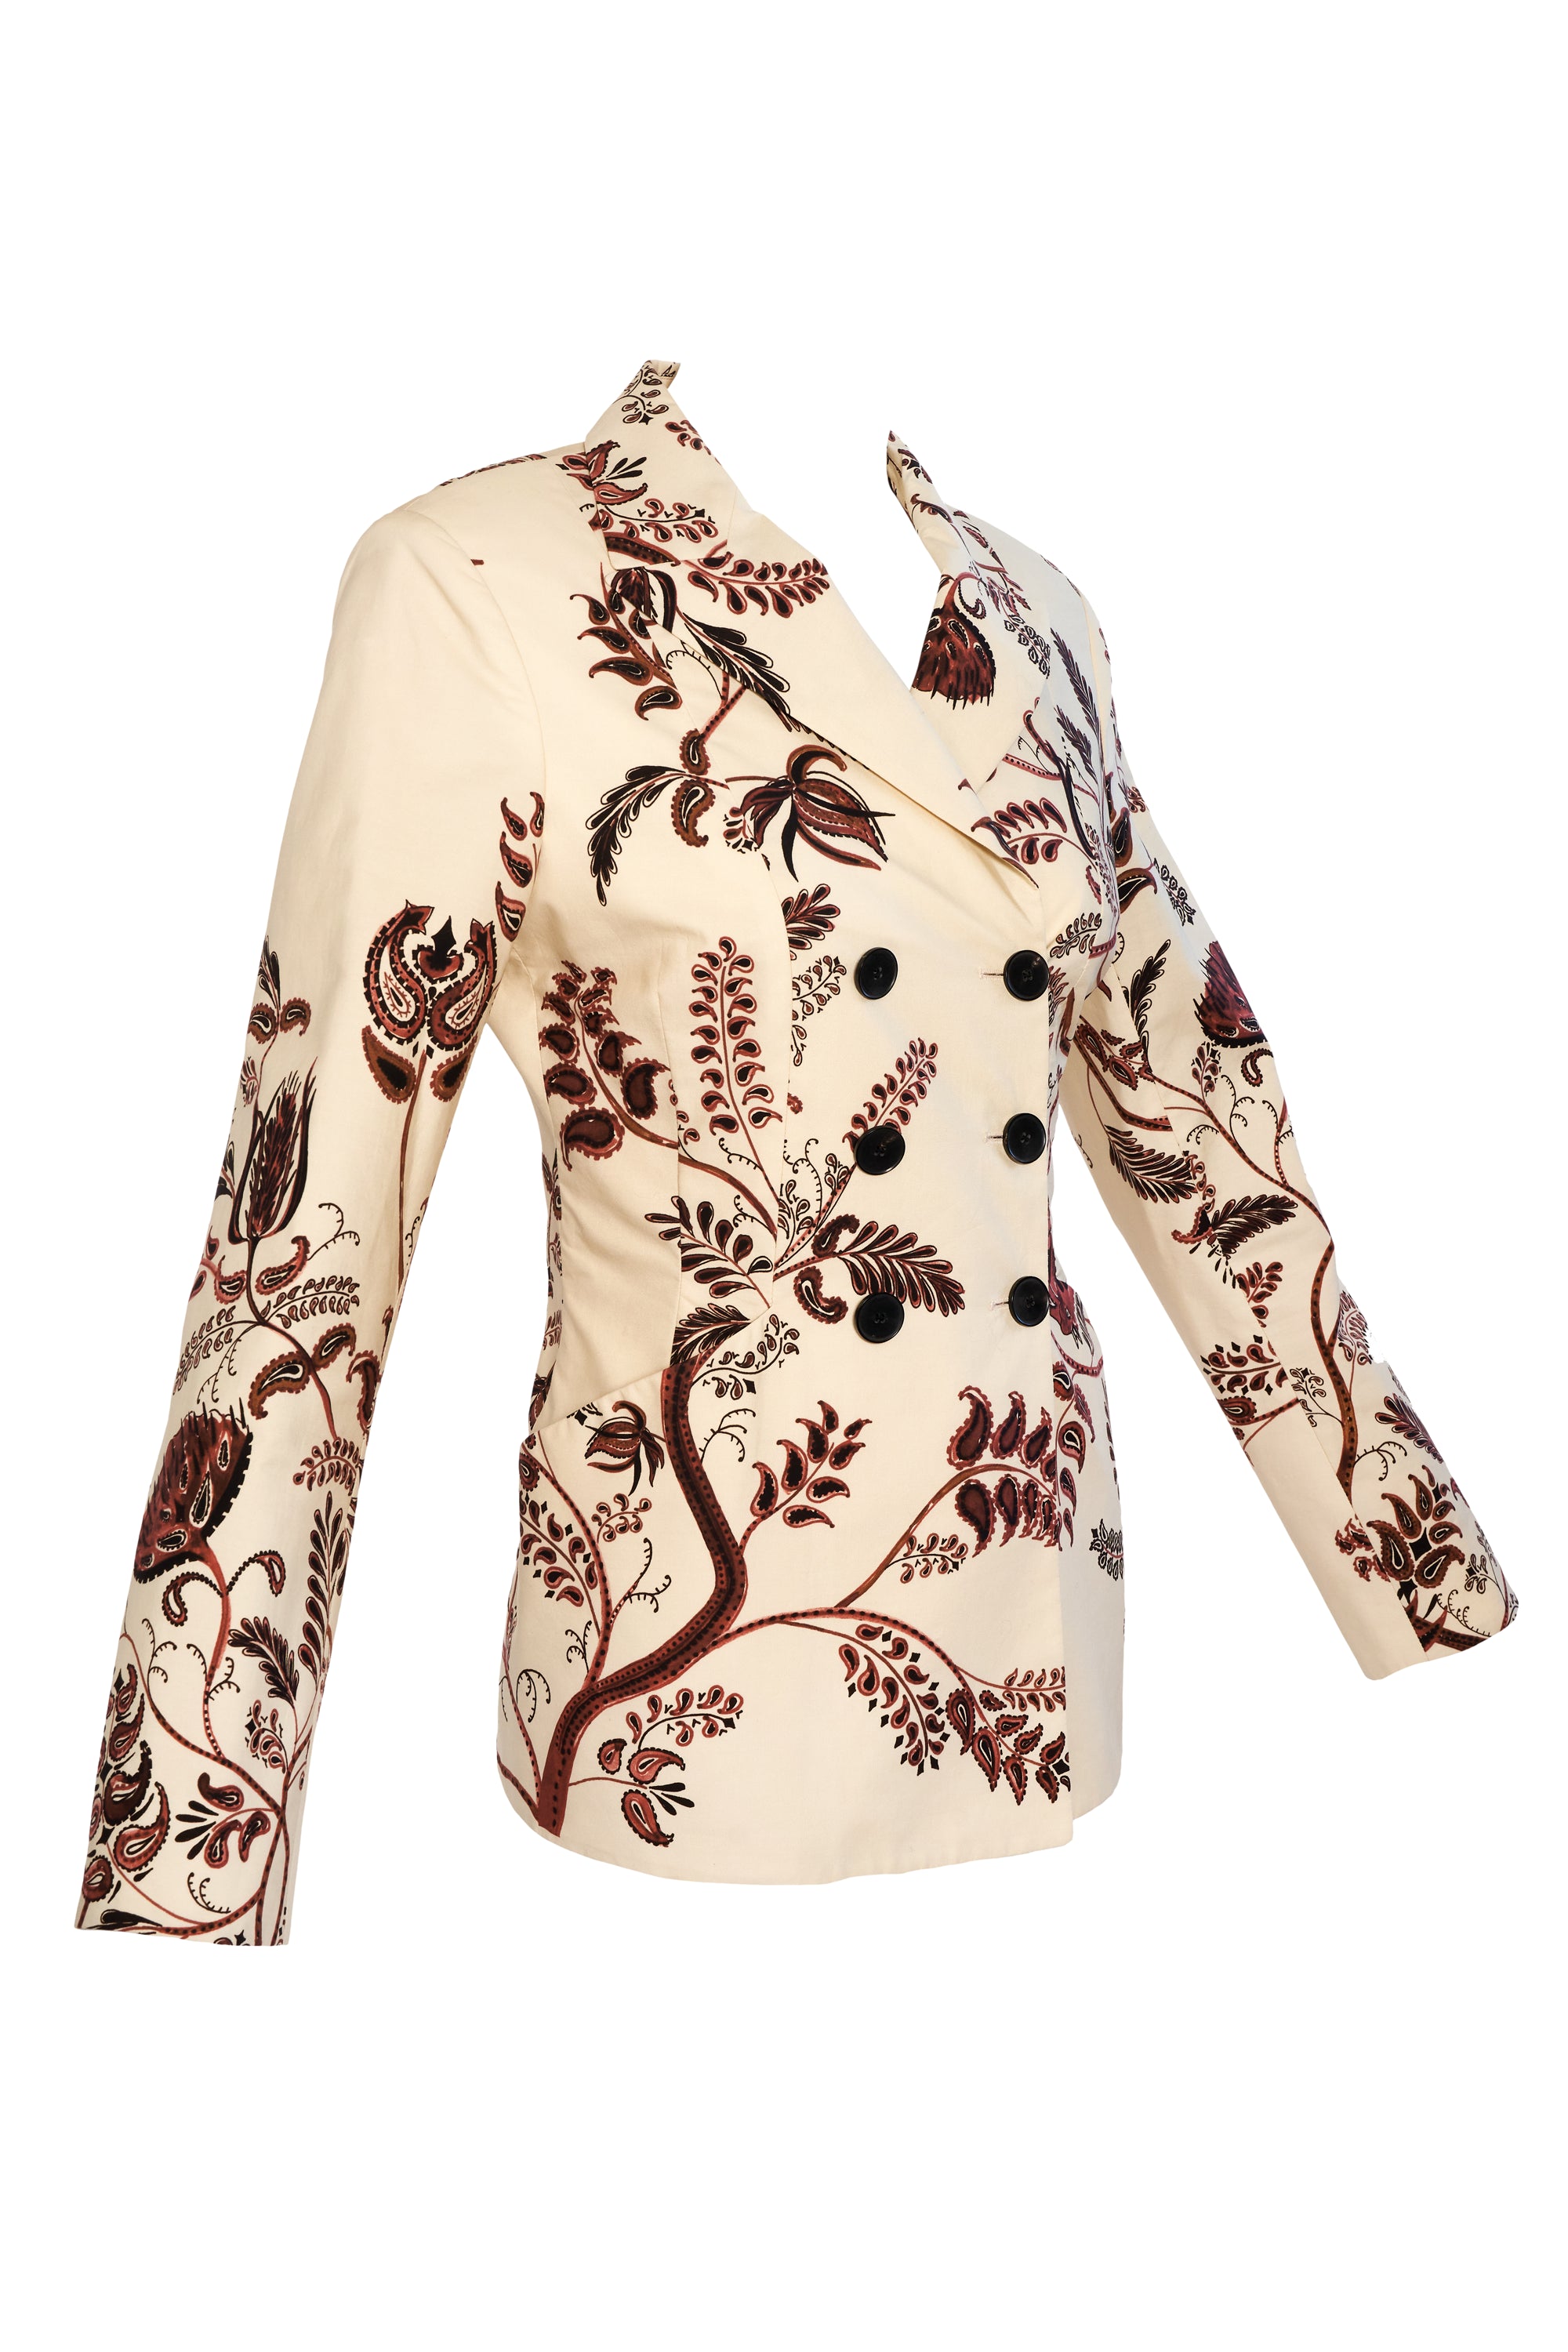 Christian Dior Beige Cotton Pattern Jacket Size 6